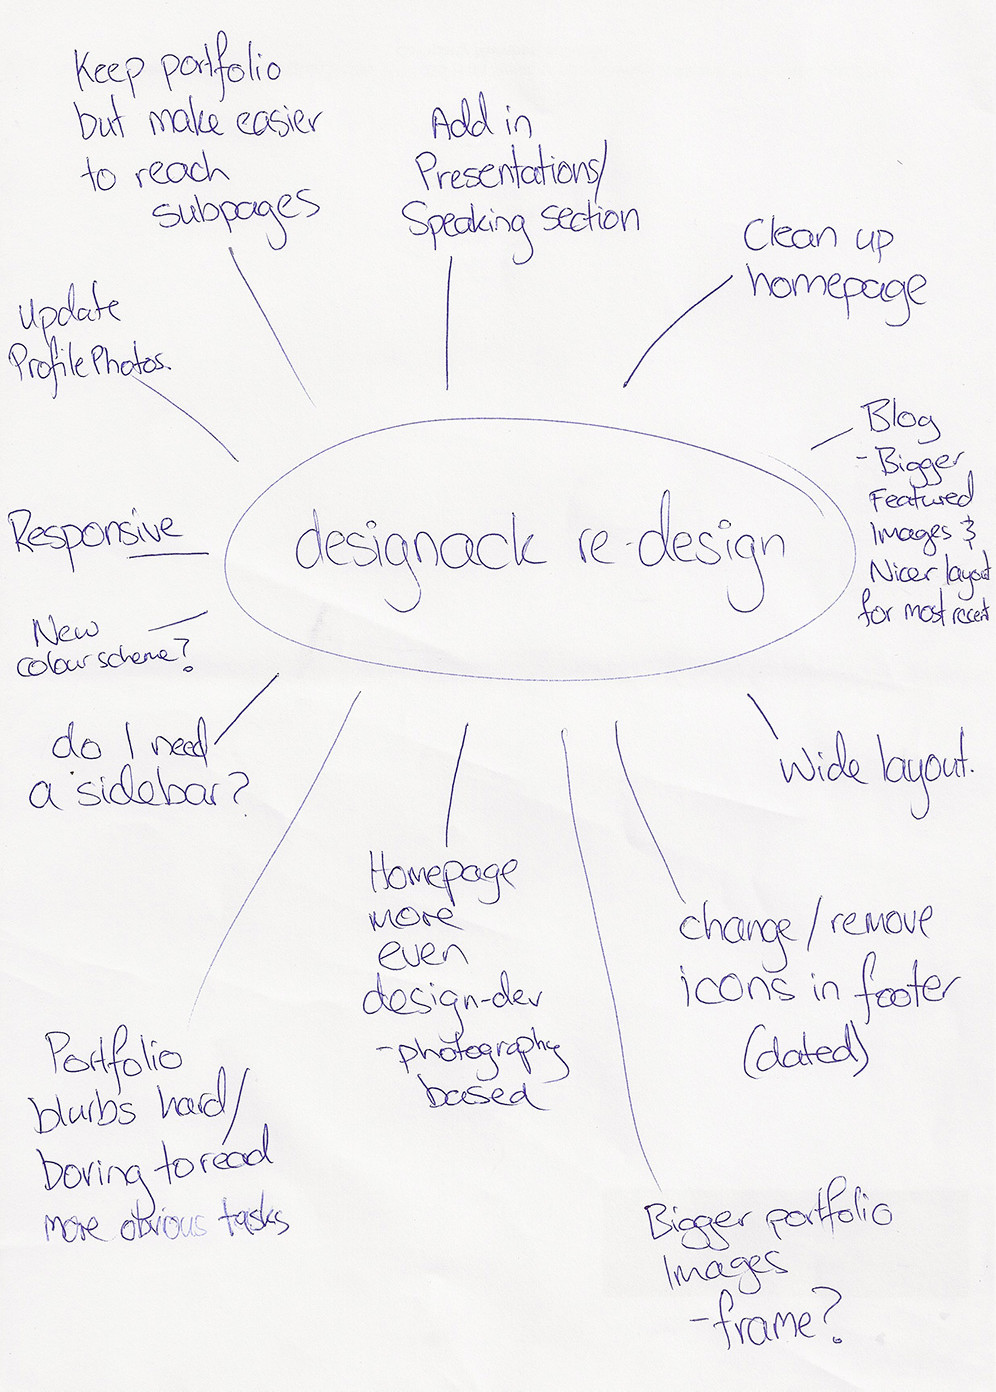 Brainstorm of ideas and improvements on designack.com